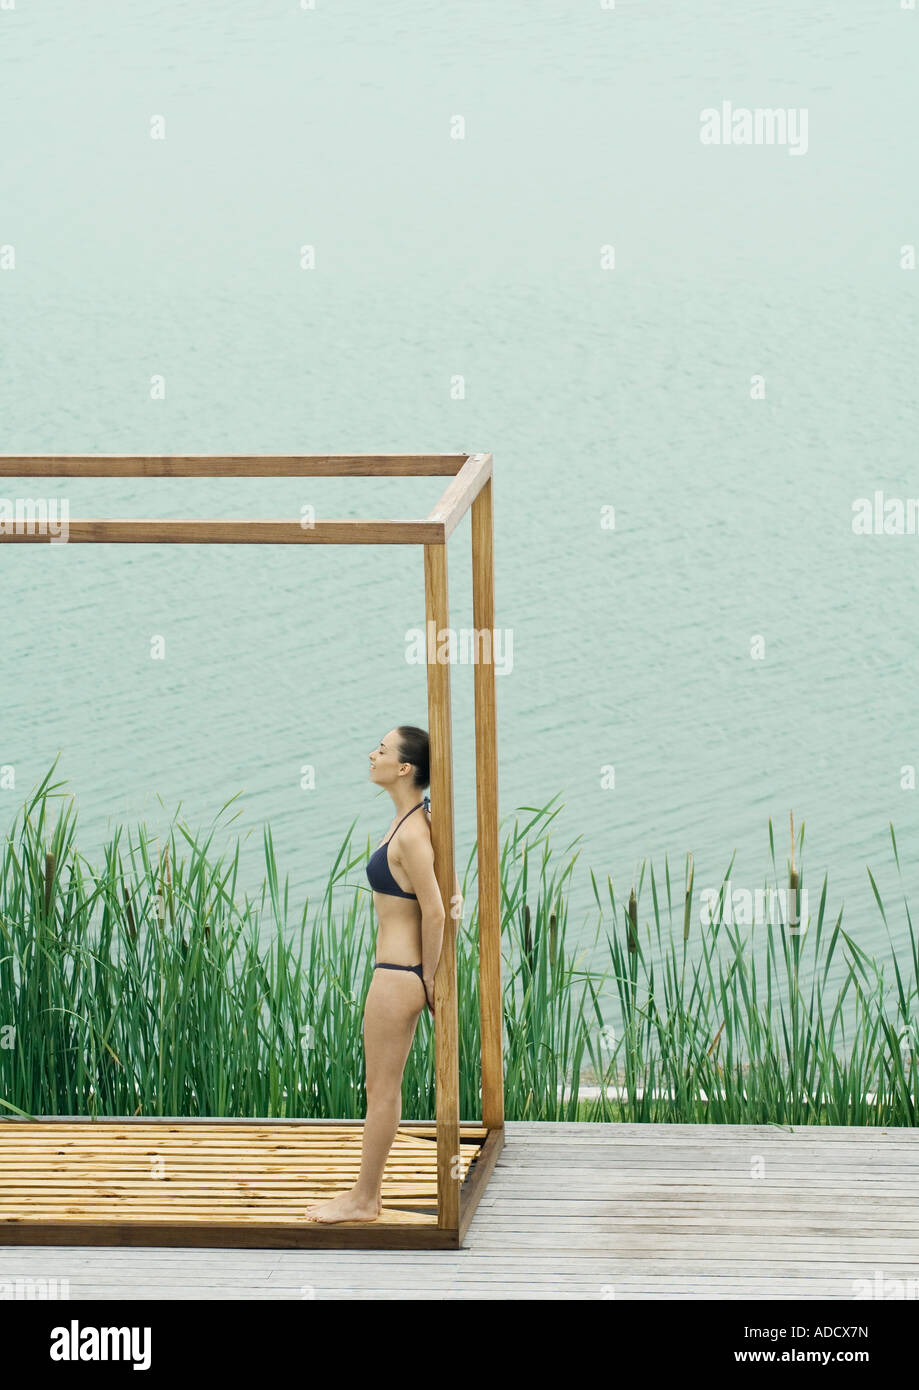 Woman wearing bikini, standing in wooden structure, near lake Stock Photo